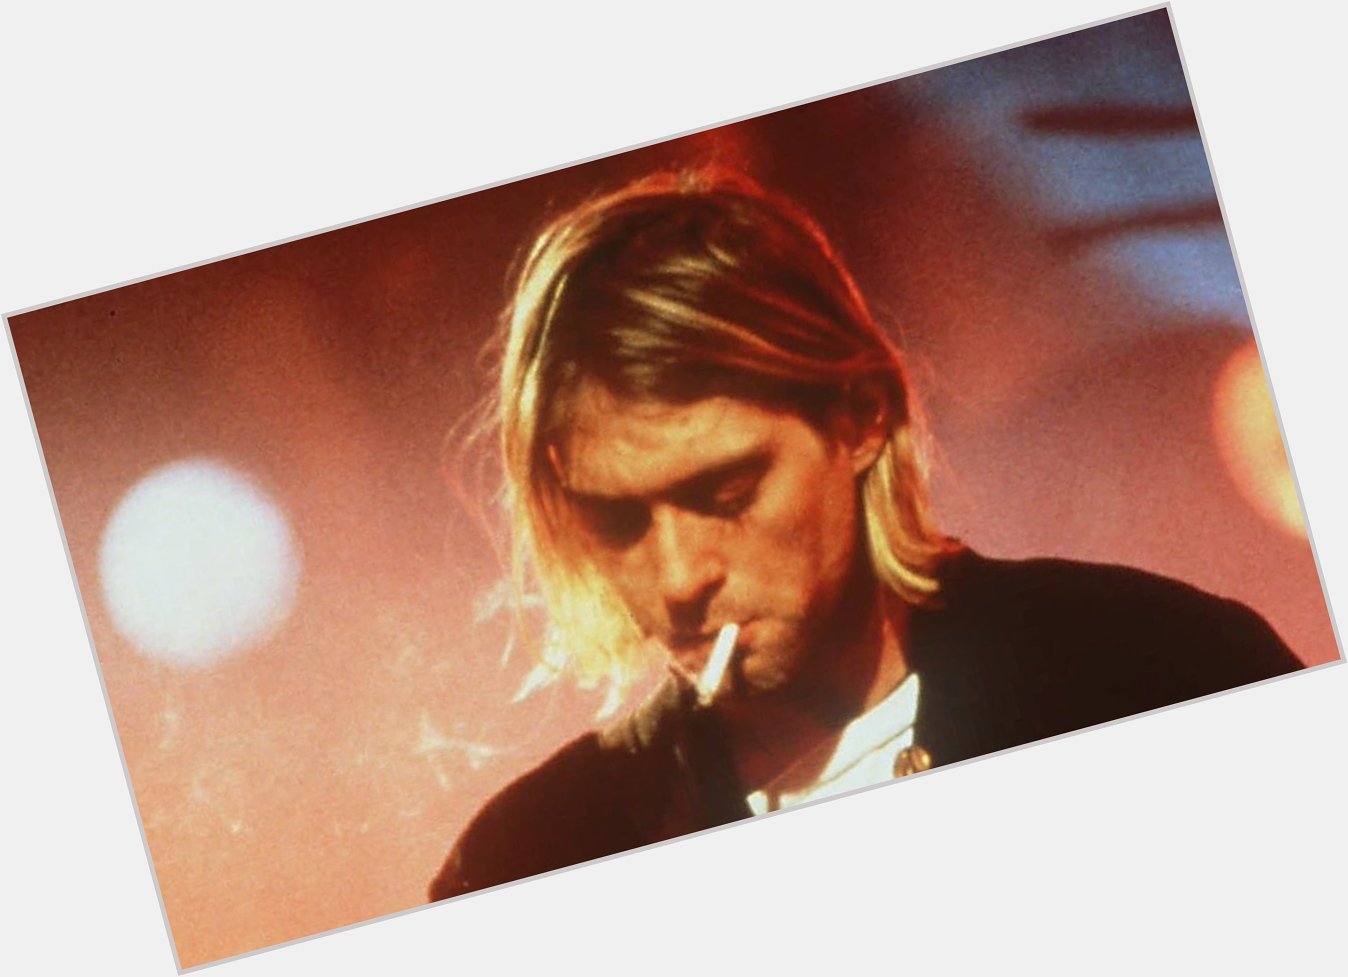 Happy birthday to the legend himself, Kurt Cobain! 